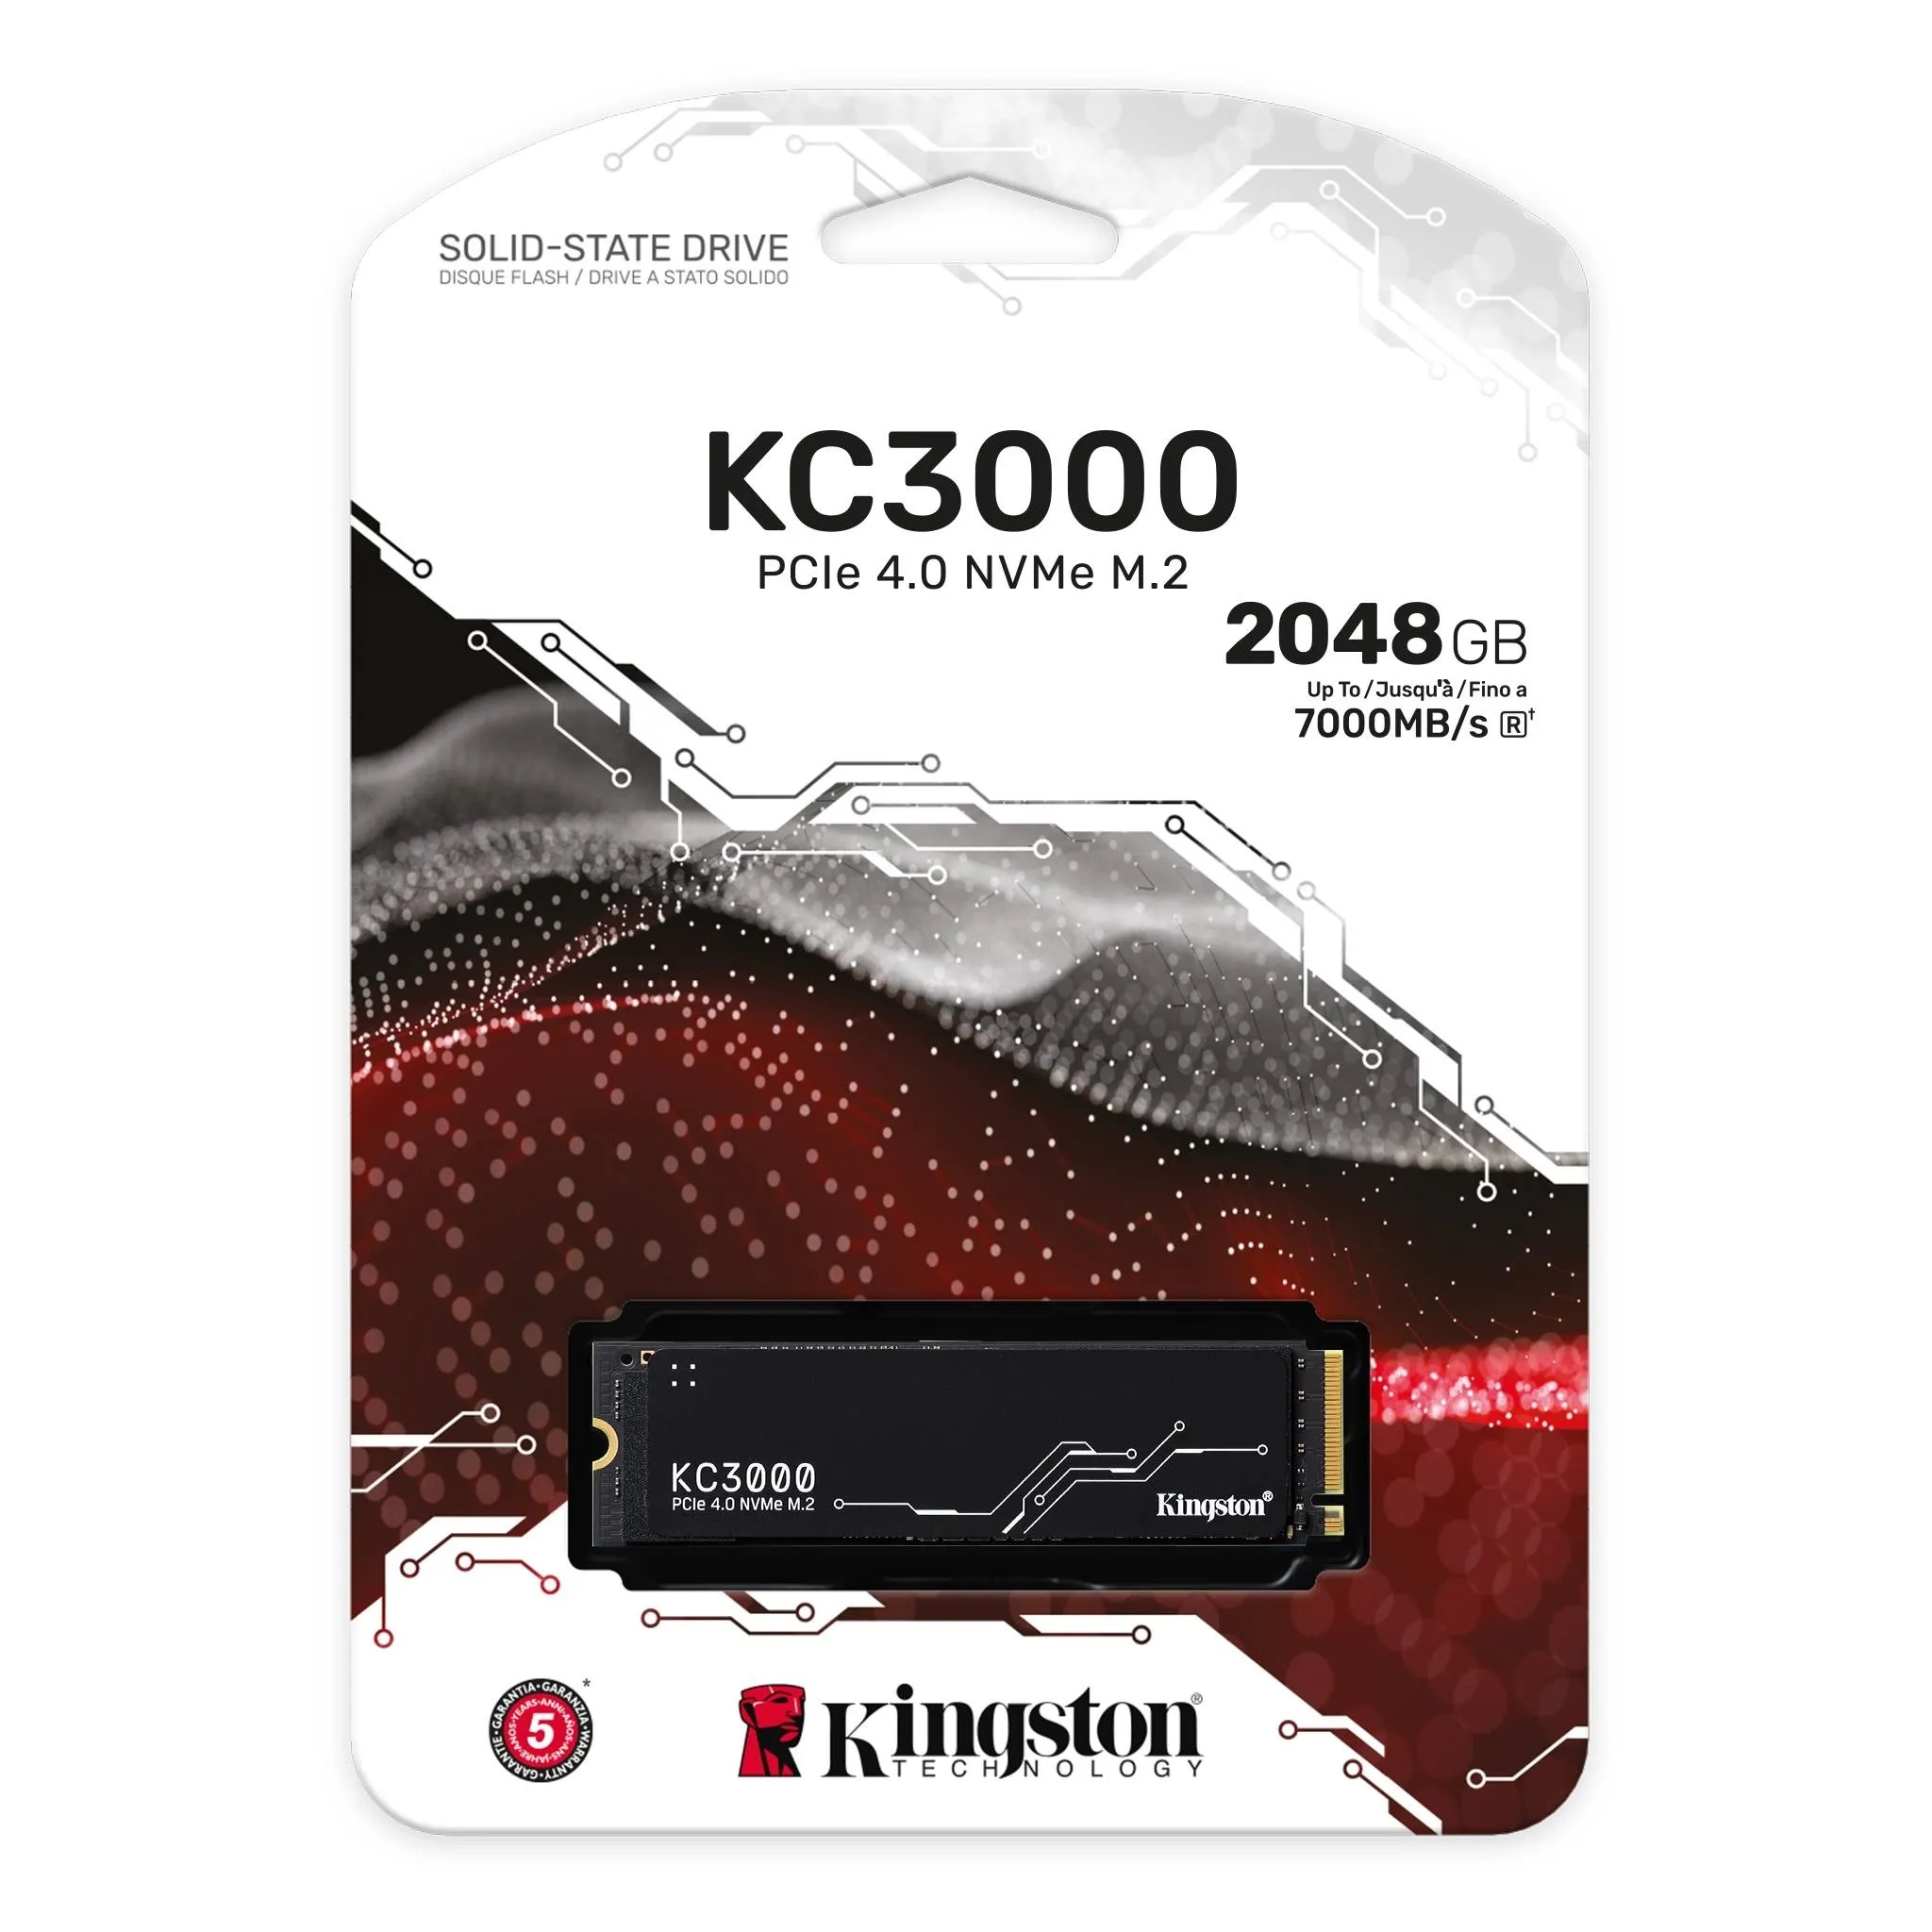 KINGSTON KC3000 2048GB PCIe 4.0 NVMe M.2 SSD High-Performance, 7000MB/s Read, 7000MB/s Write